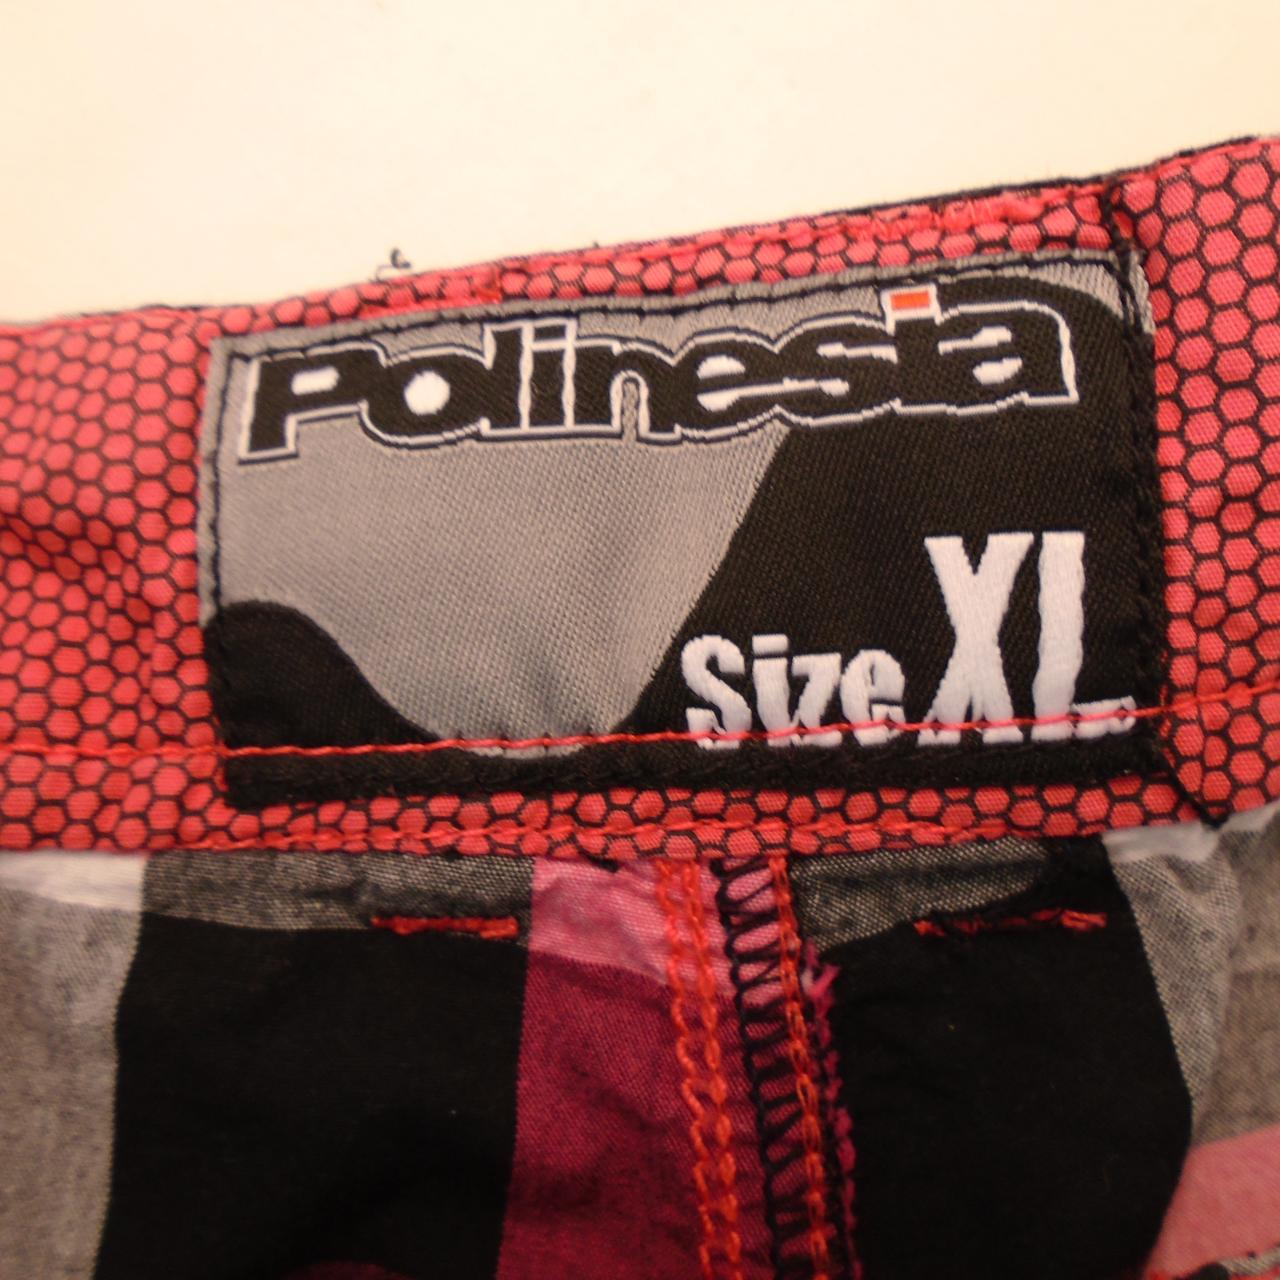 Men's Shorts Polinesia. Multicolor. XL. Used. Good